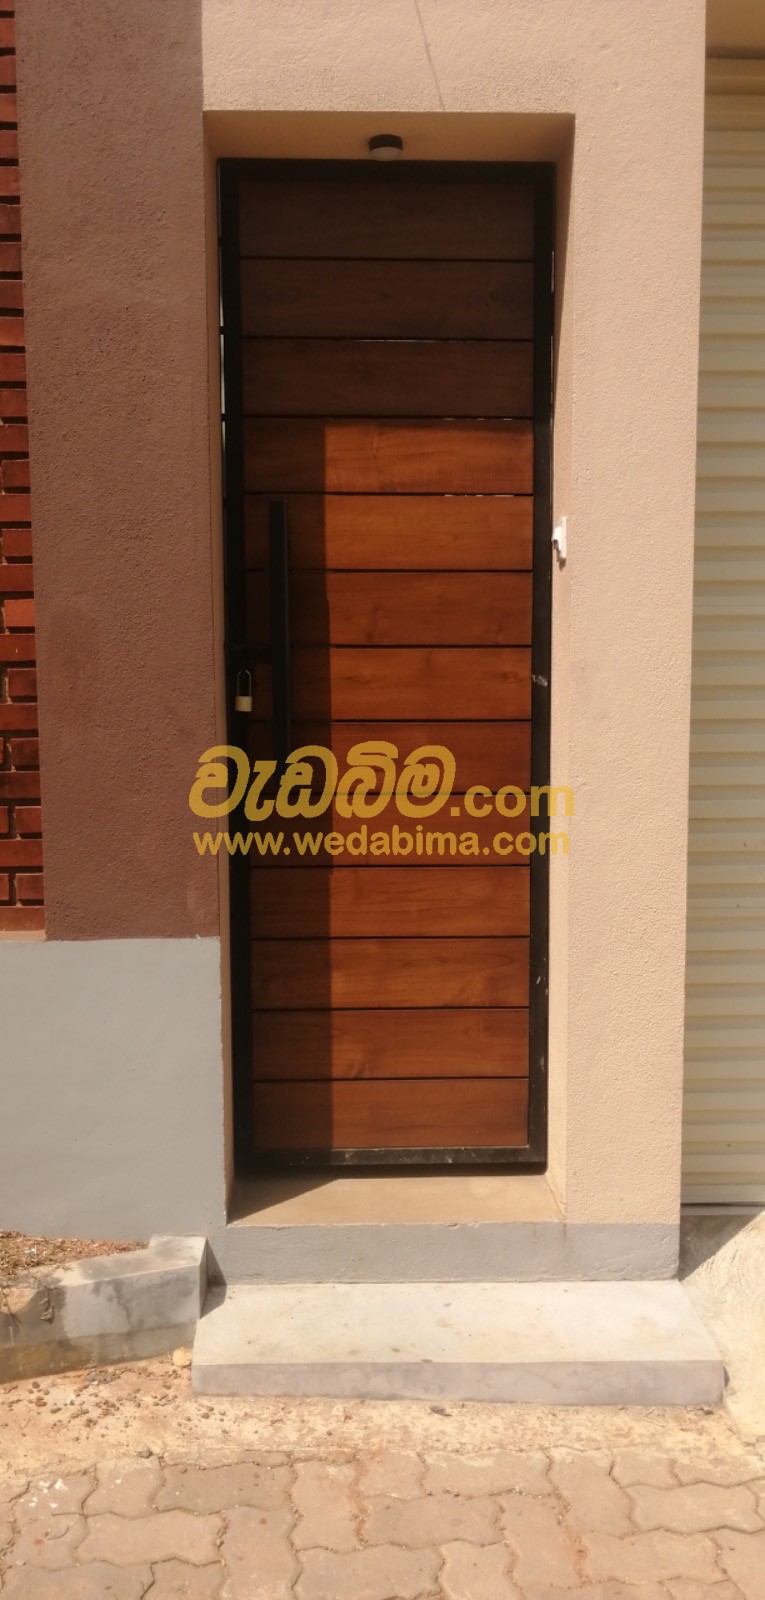 Doors Windows Price in Sri Lanka